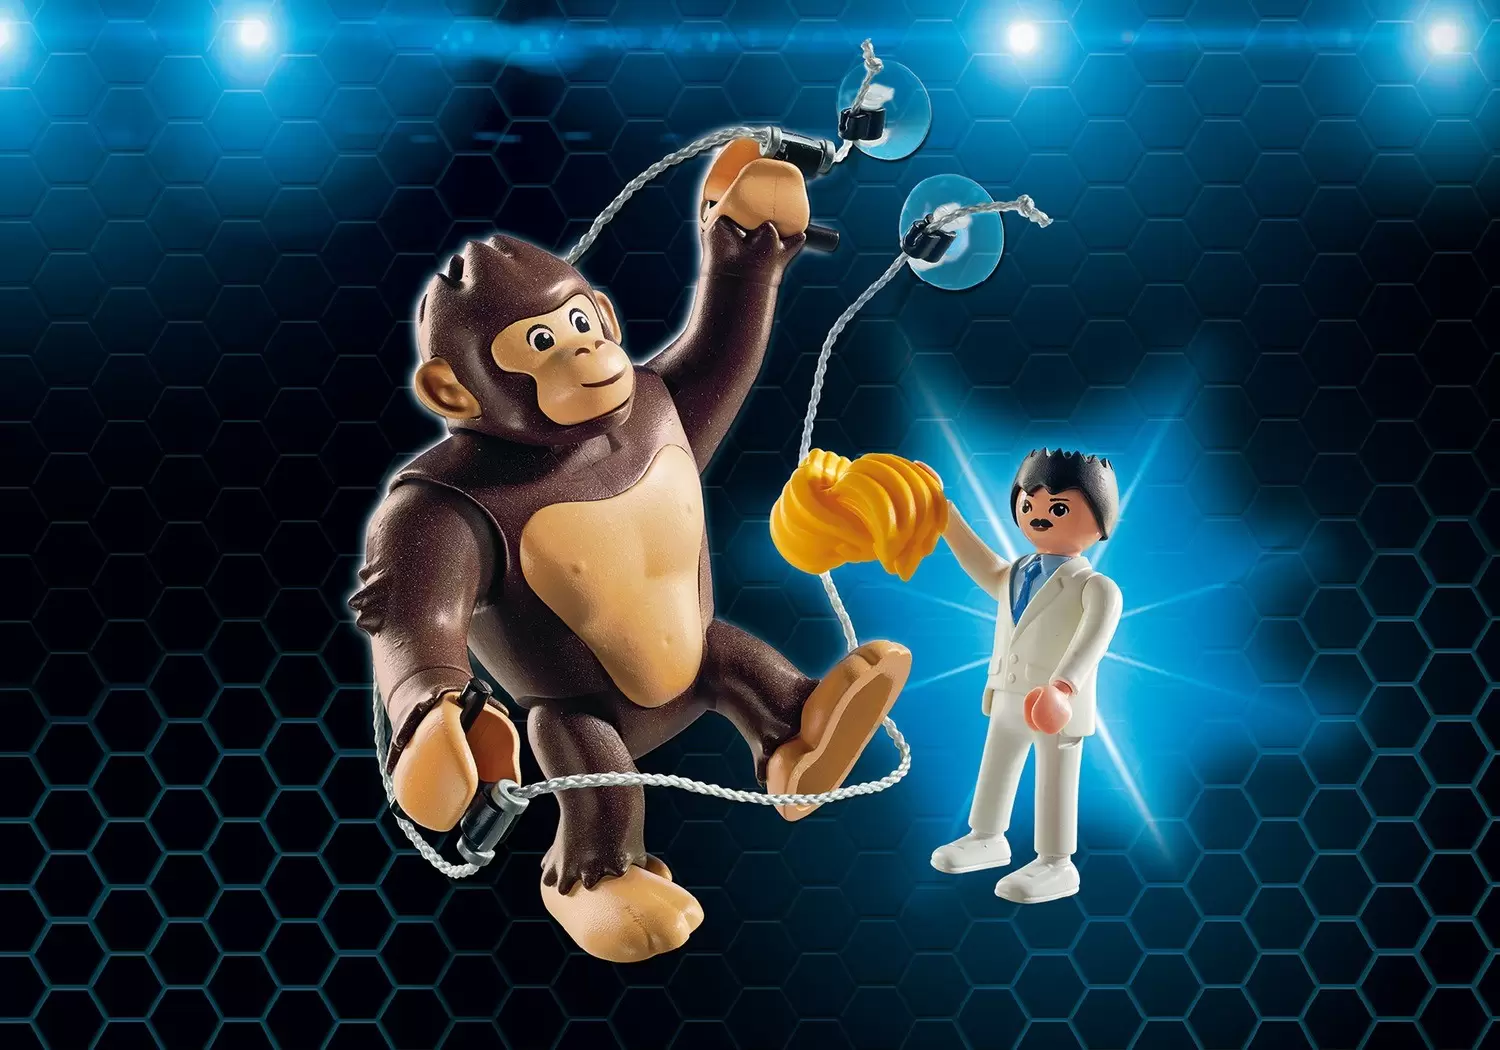 Recreation Hello Profession Giant monkey Gonk - Playmobil Super 4 9004